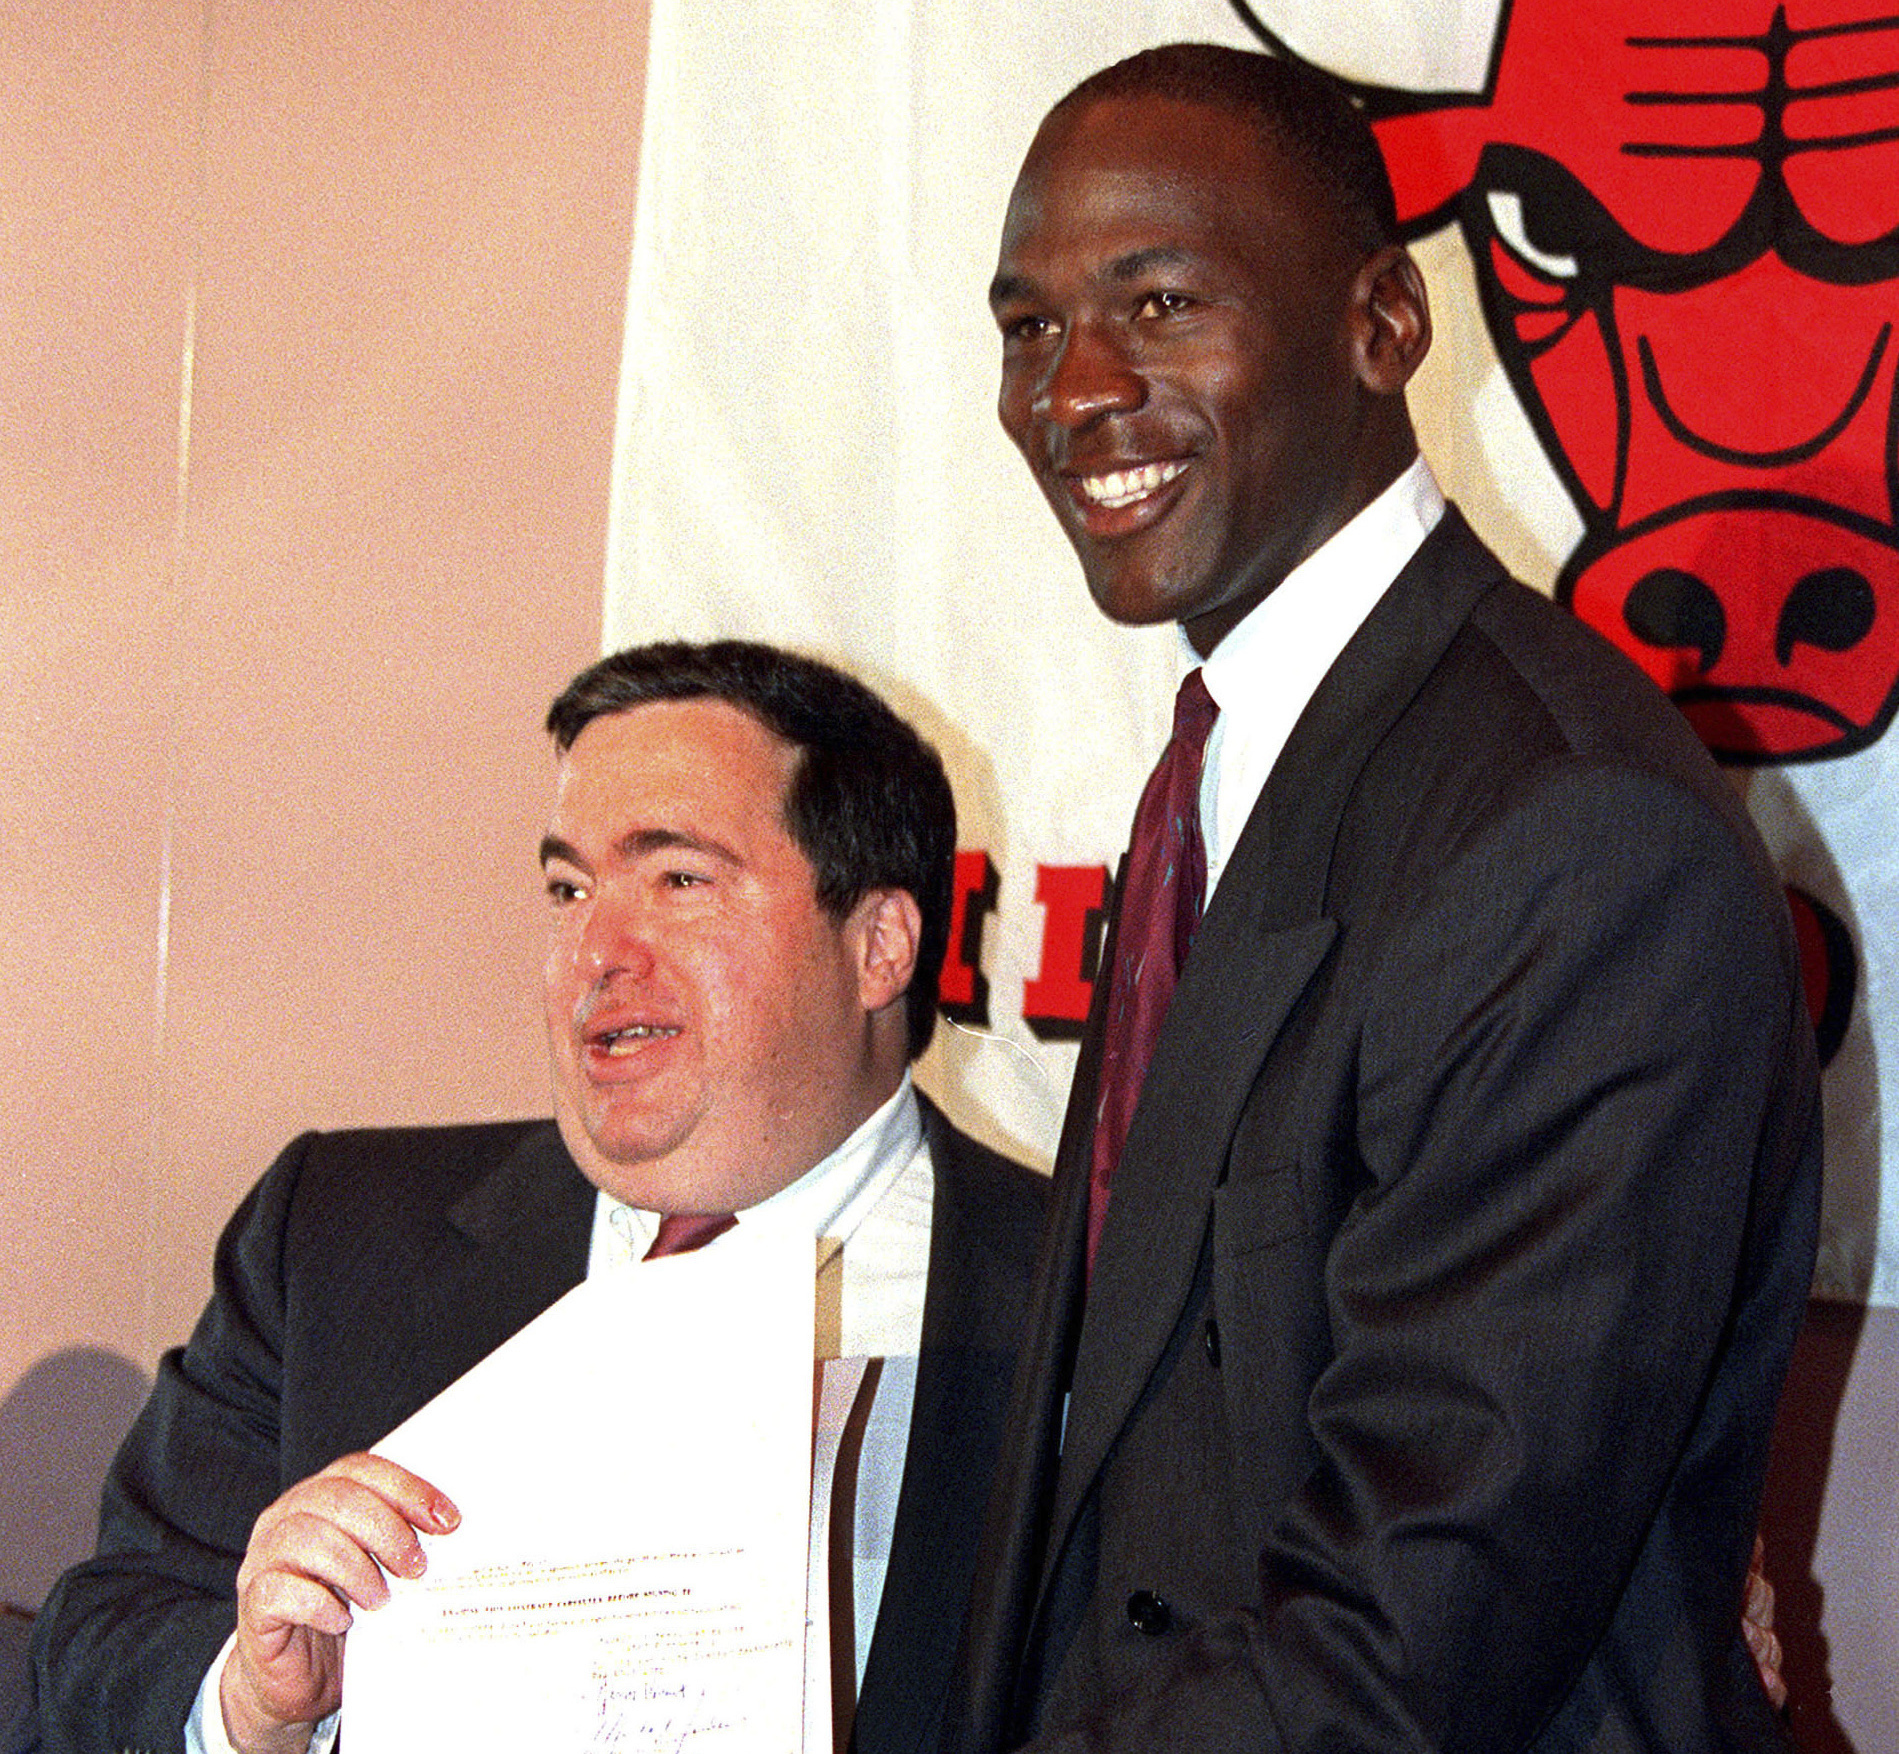 Michael Jordan with Jerry Krause